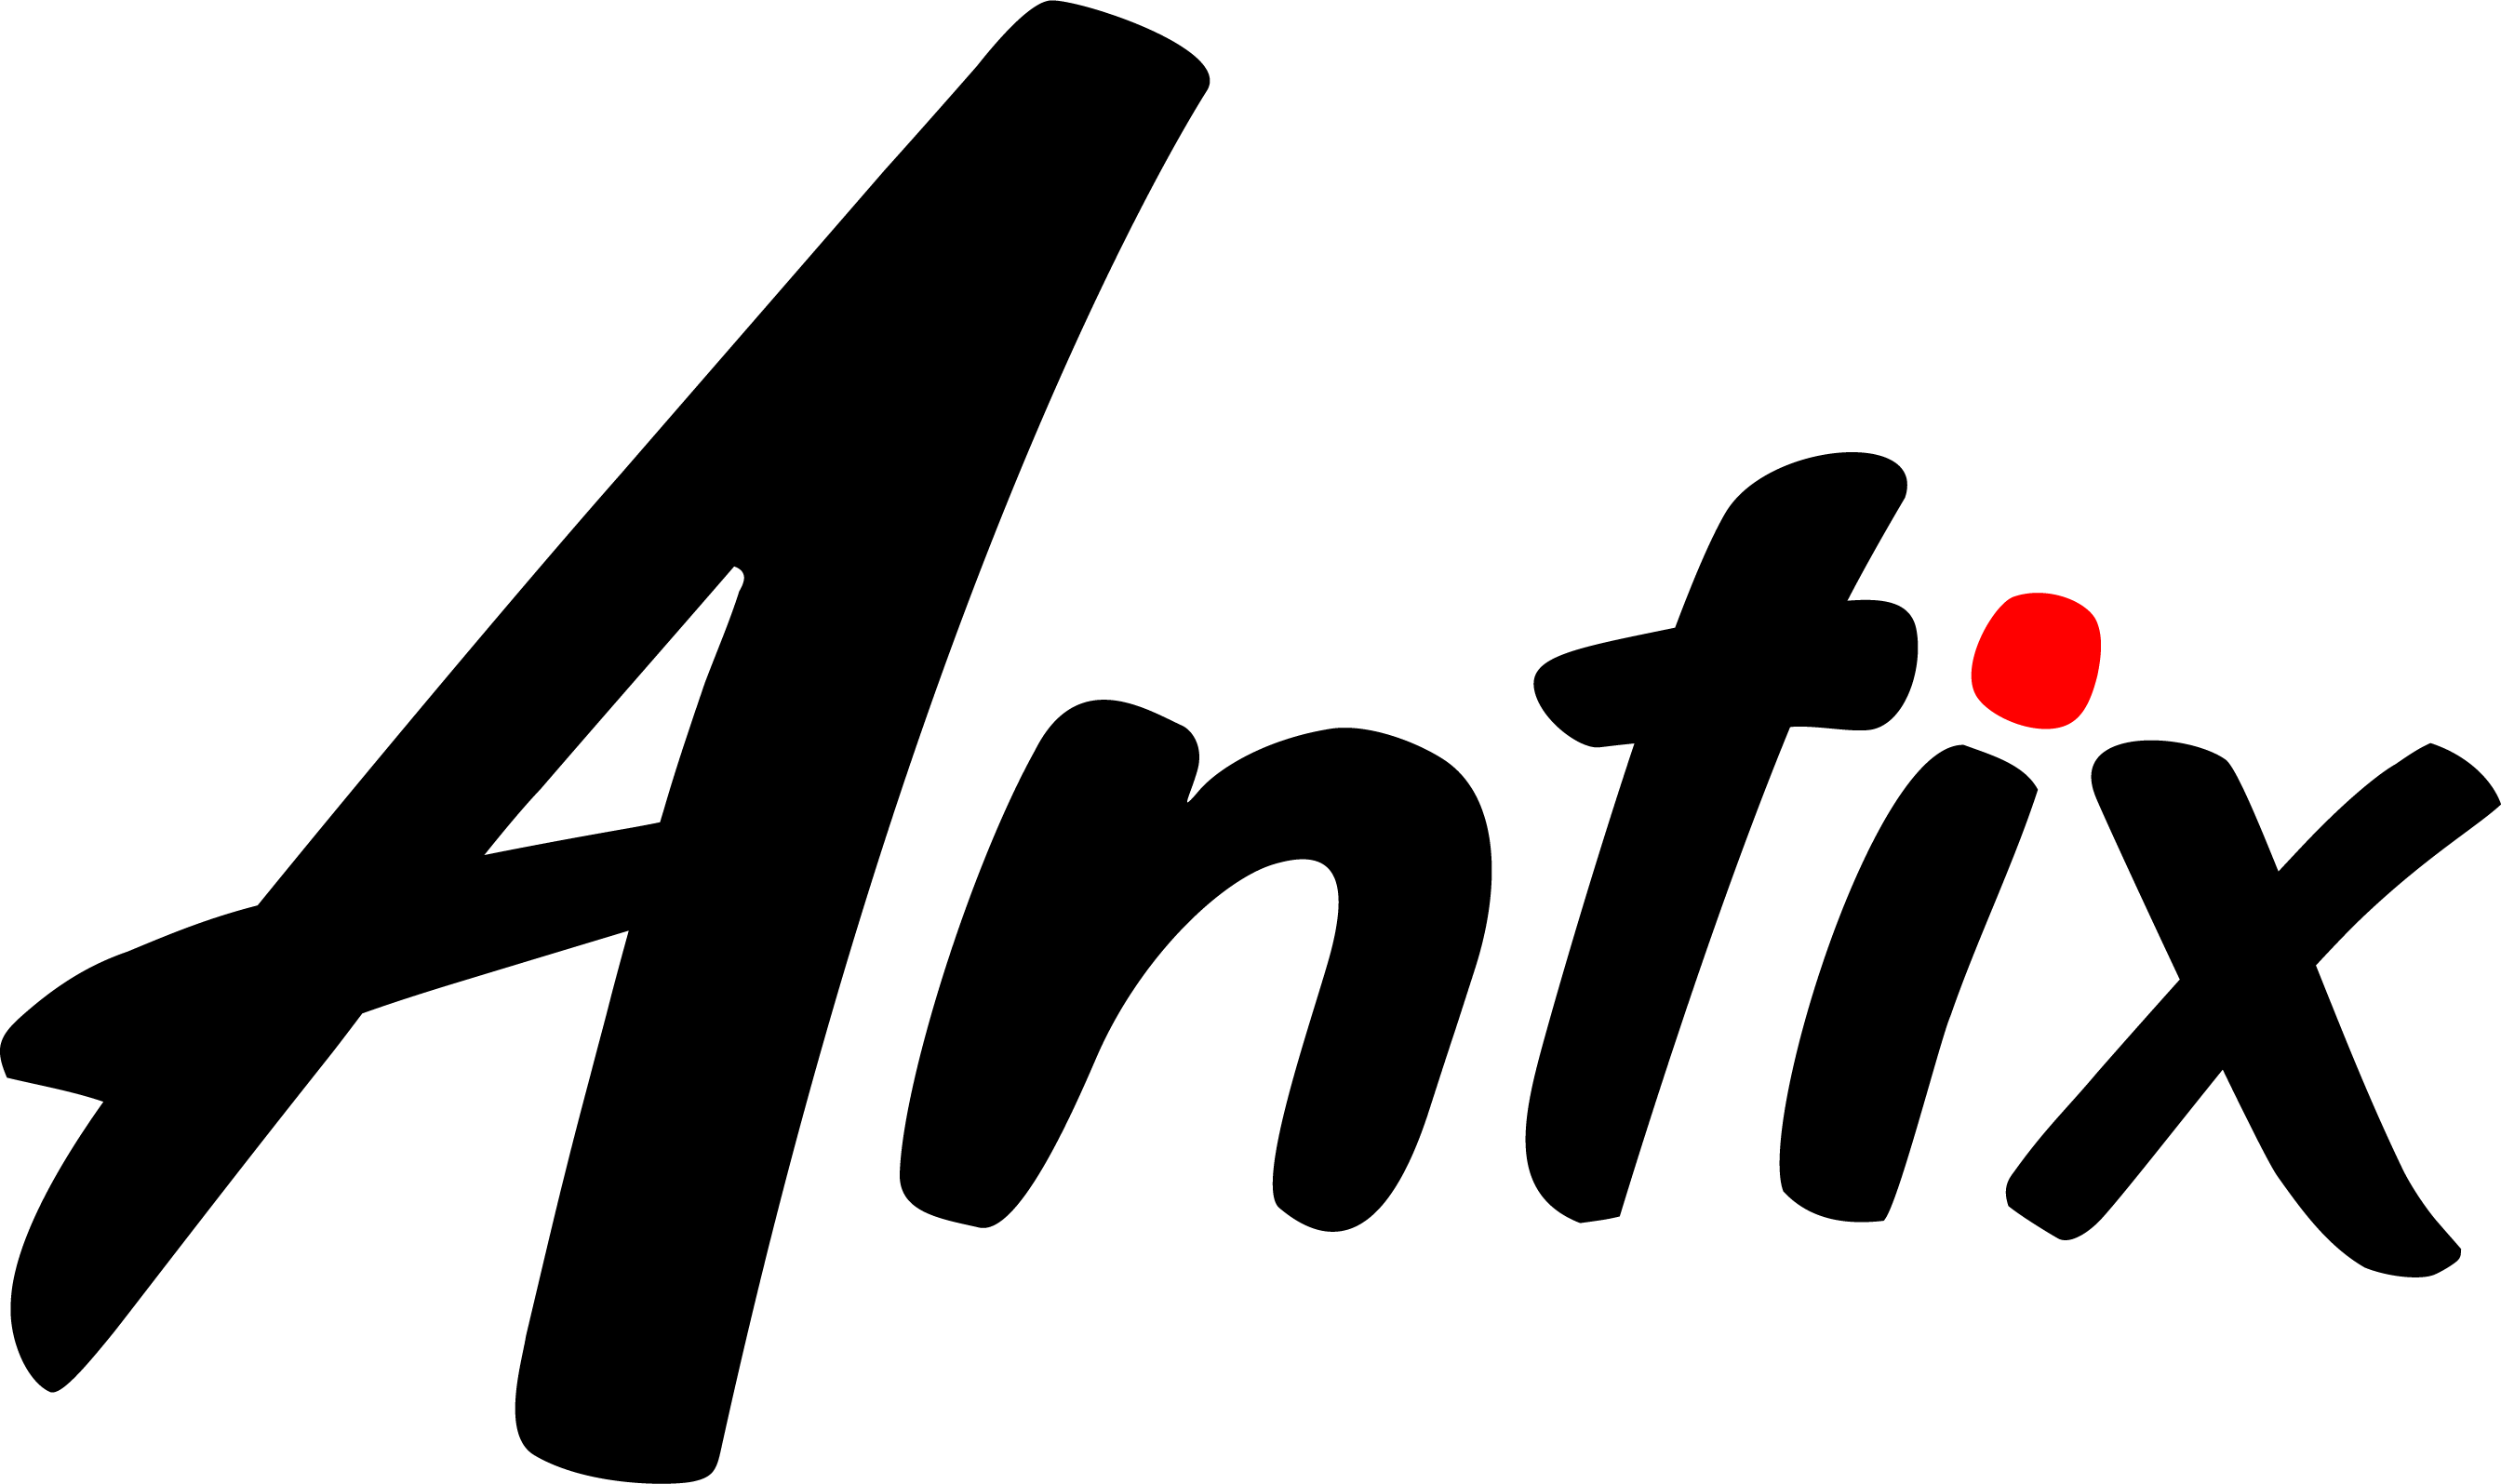 Antix Logo